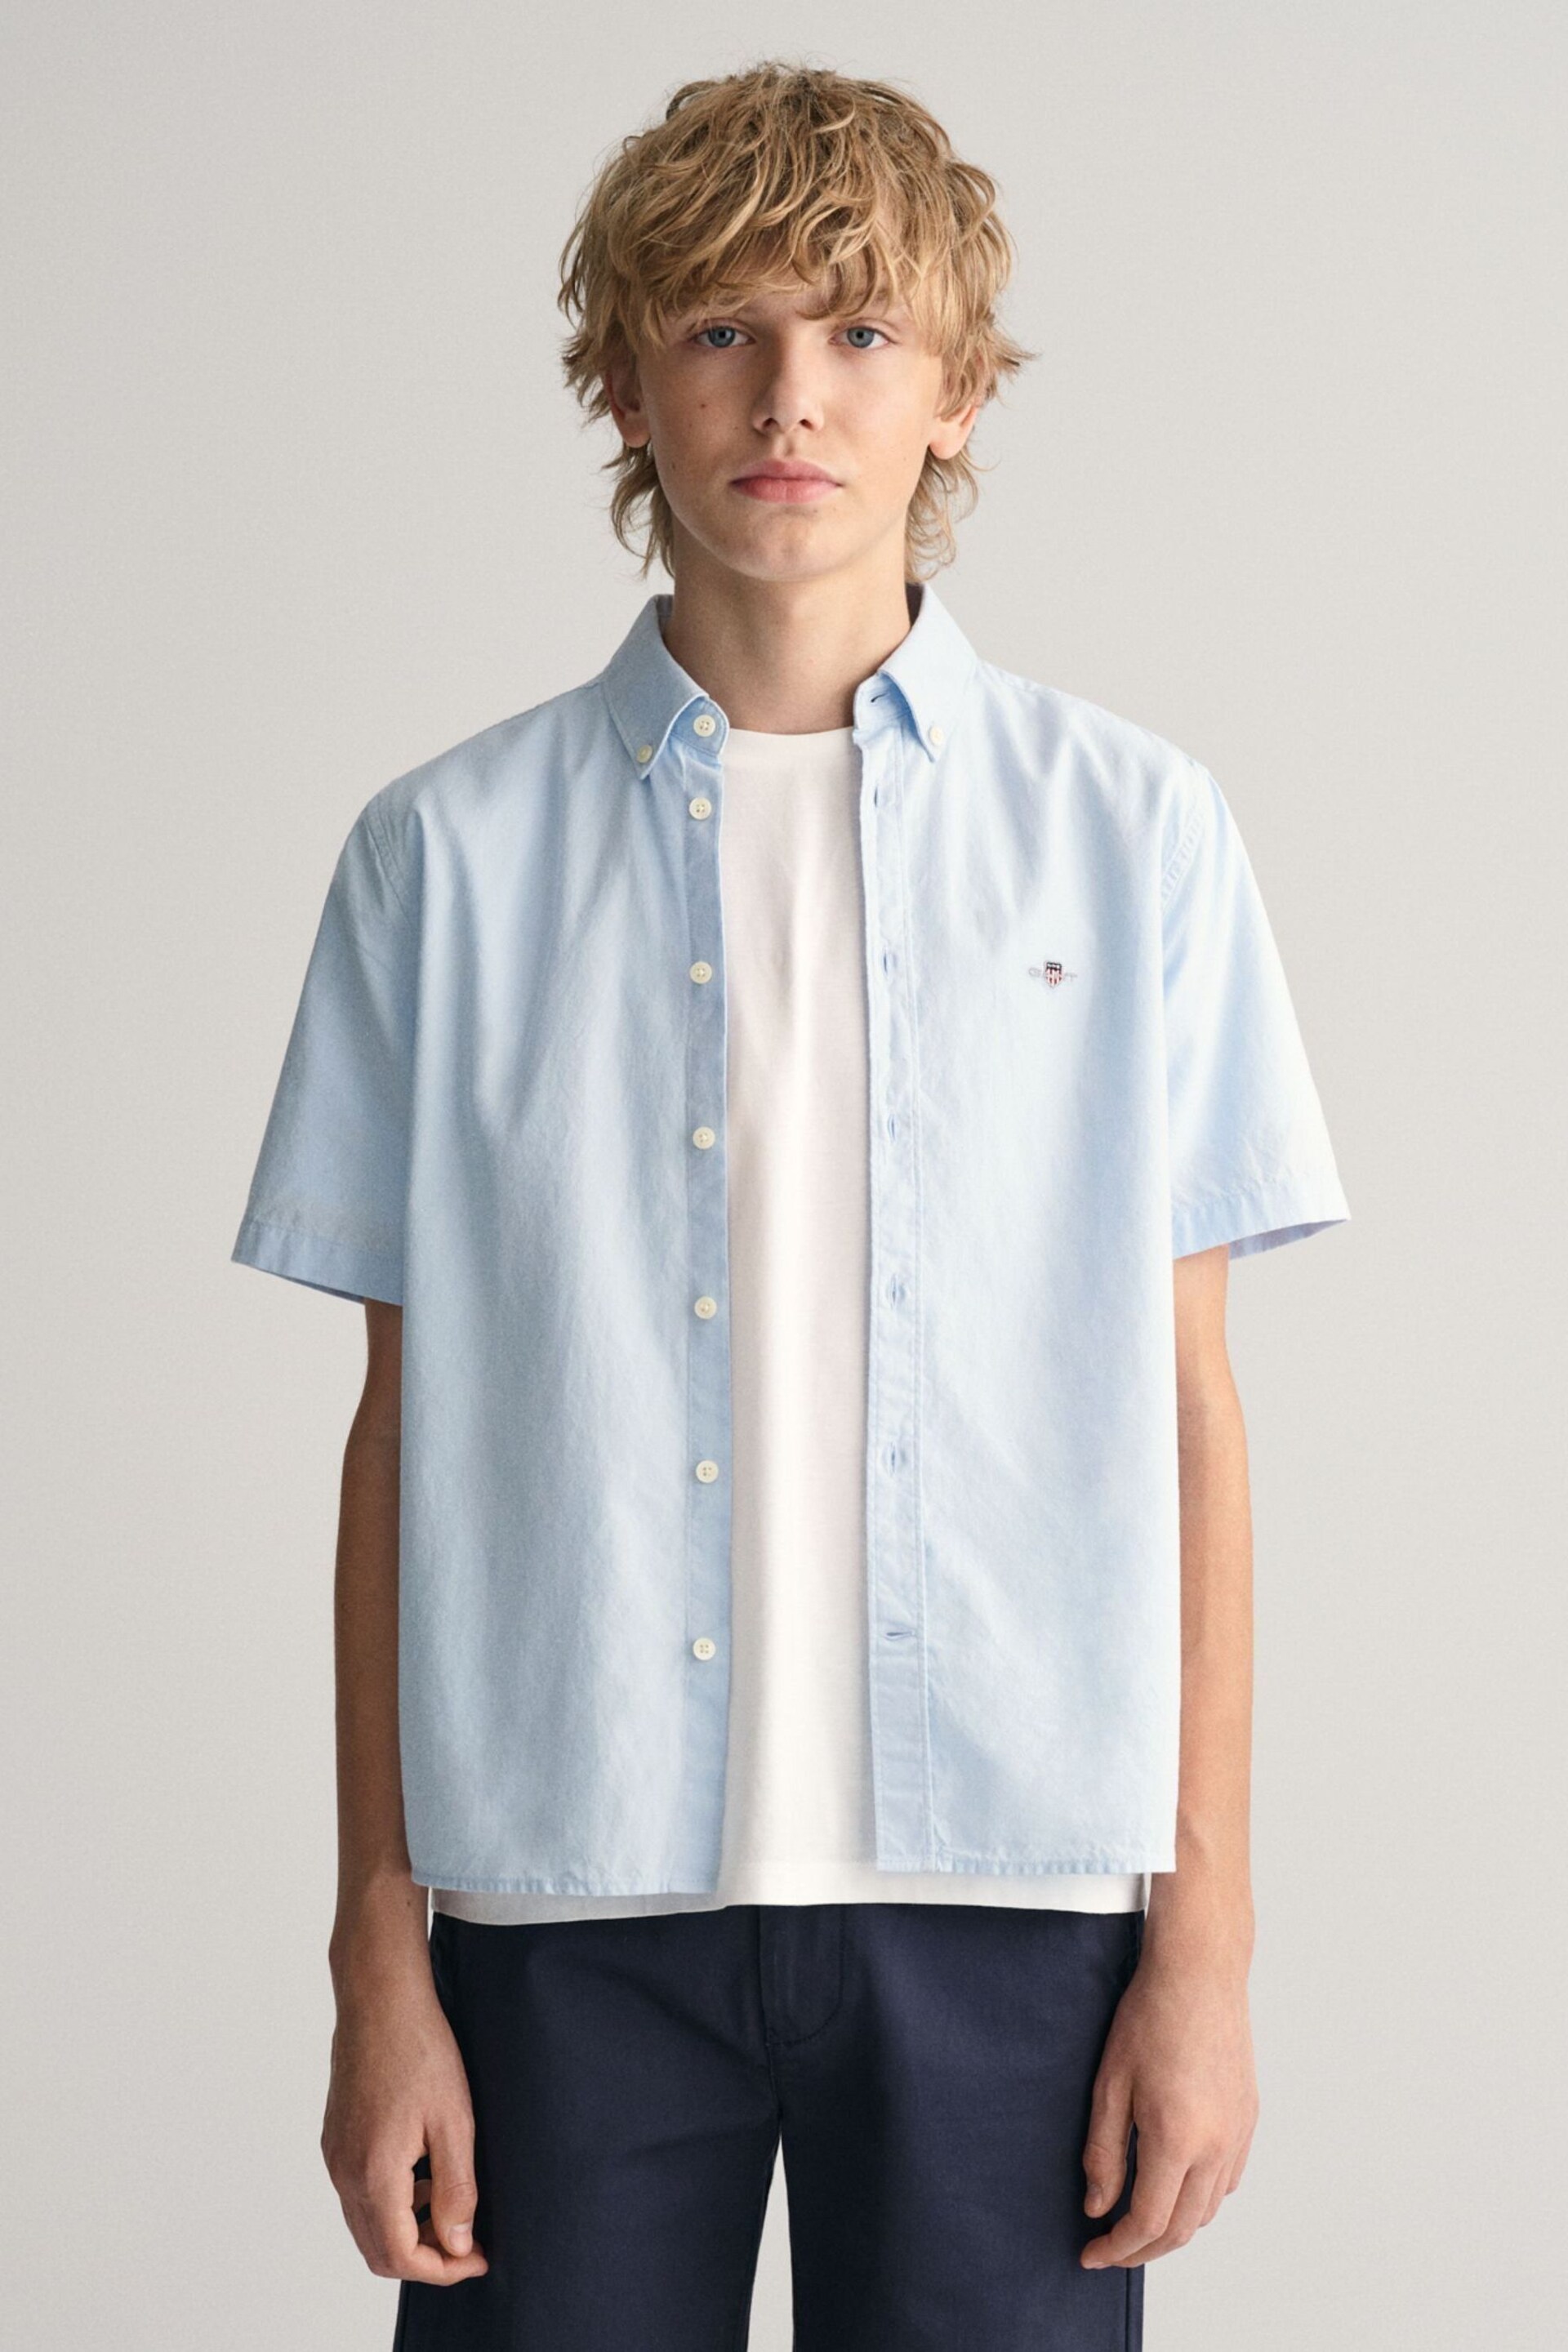 GANT Boys Oxford Short Sleeve Shirt - Image 1 of 6